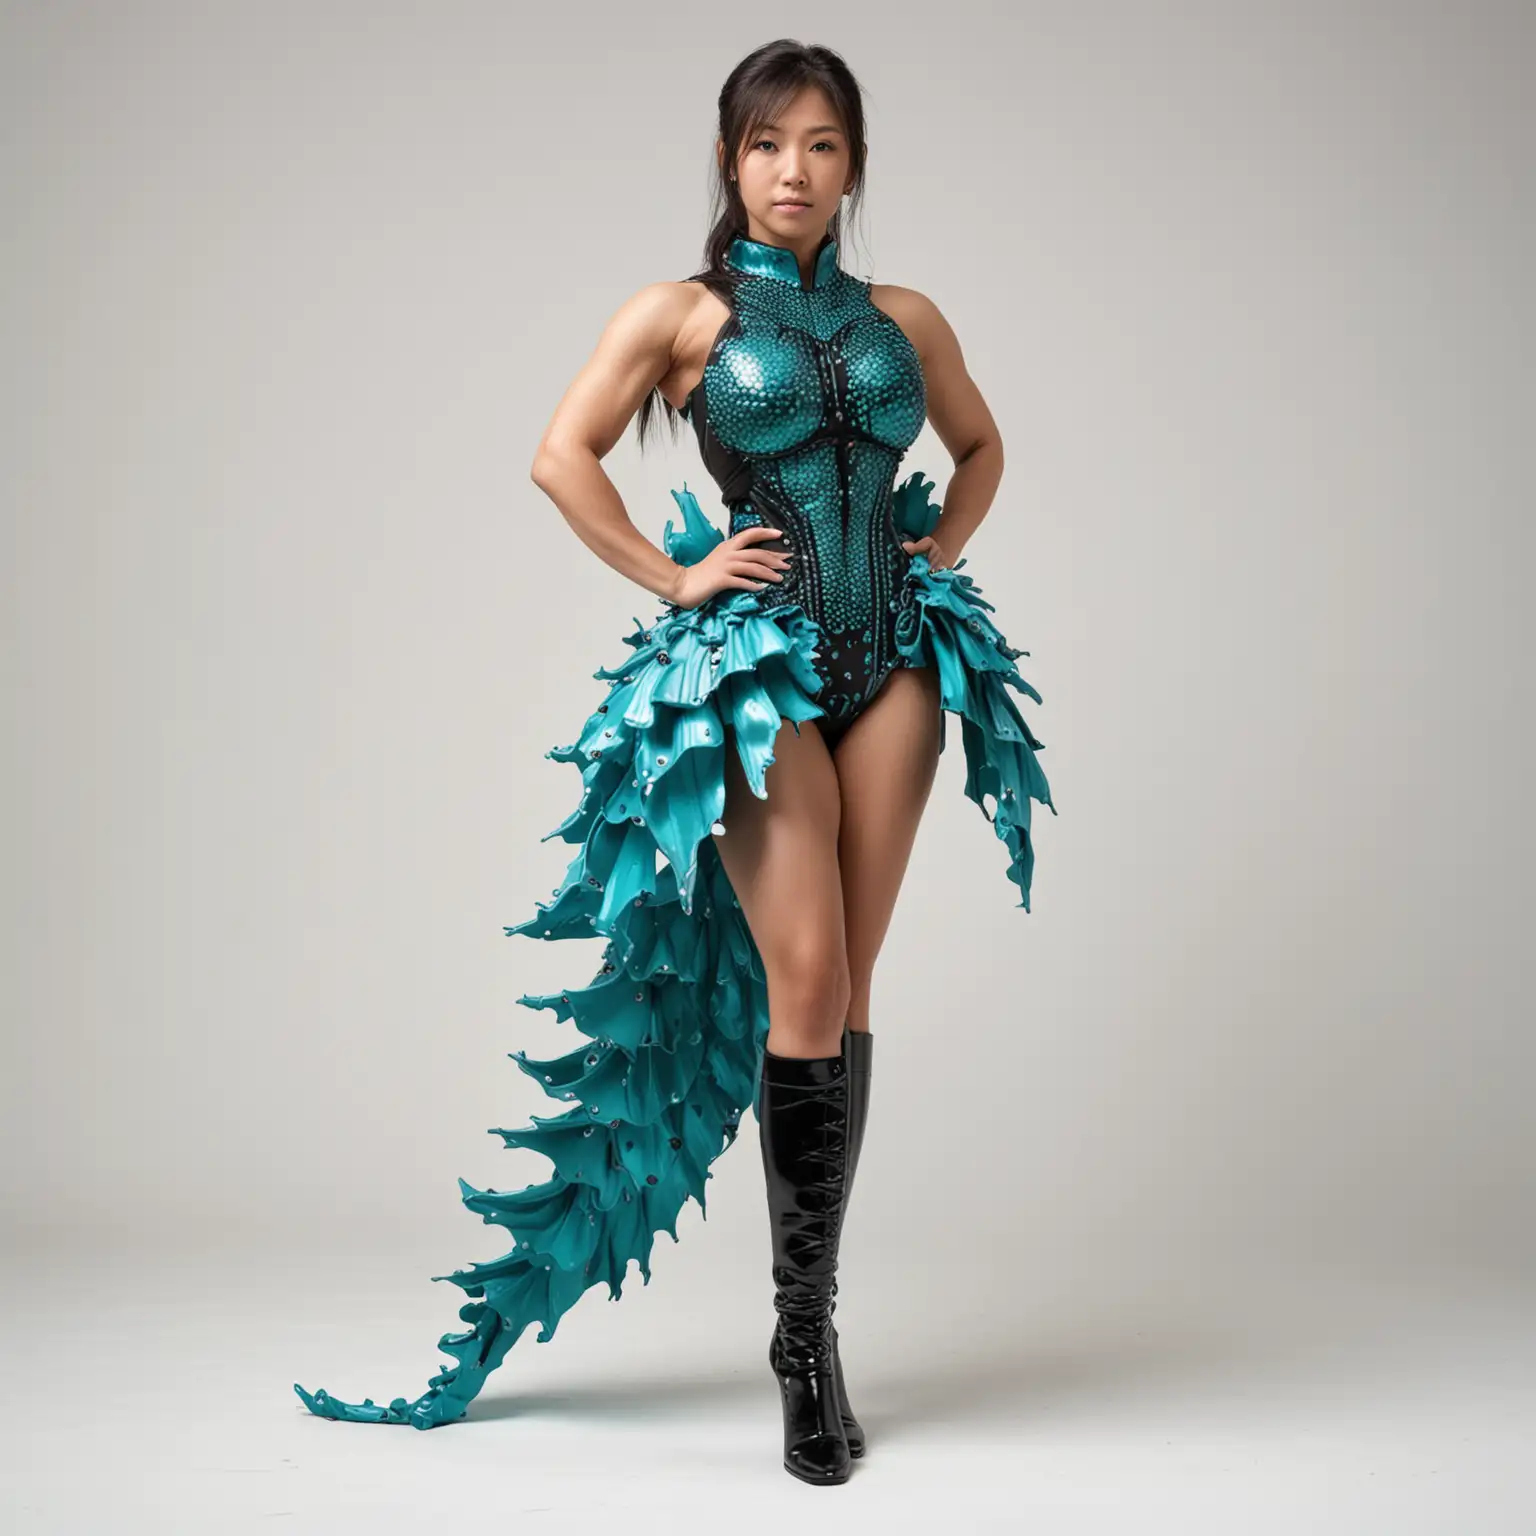 Japanese Woman Bodybuilder in Seahorse Armor SlitDress